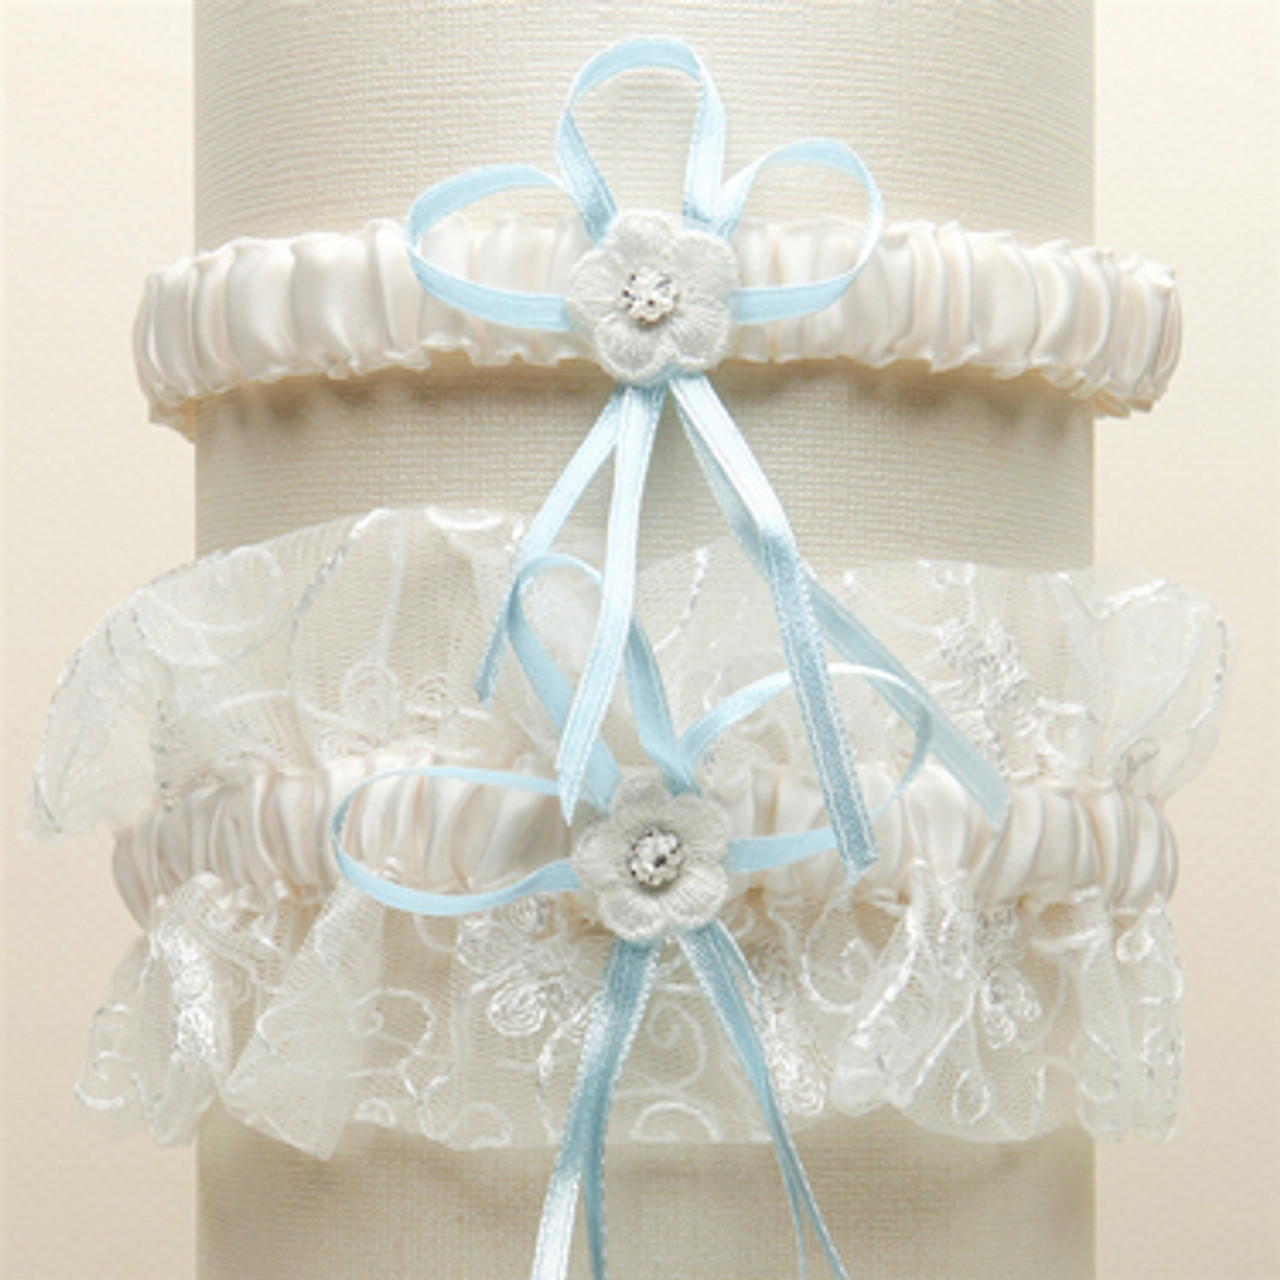 Vintage Wedding Garter Set with Floral Embroidered Tulle - Ivory with Blue G018-BL-I